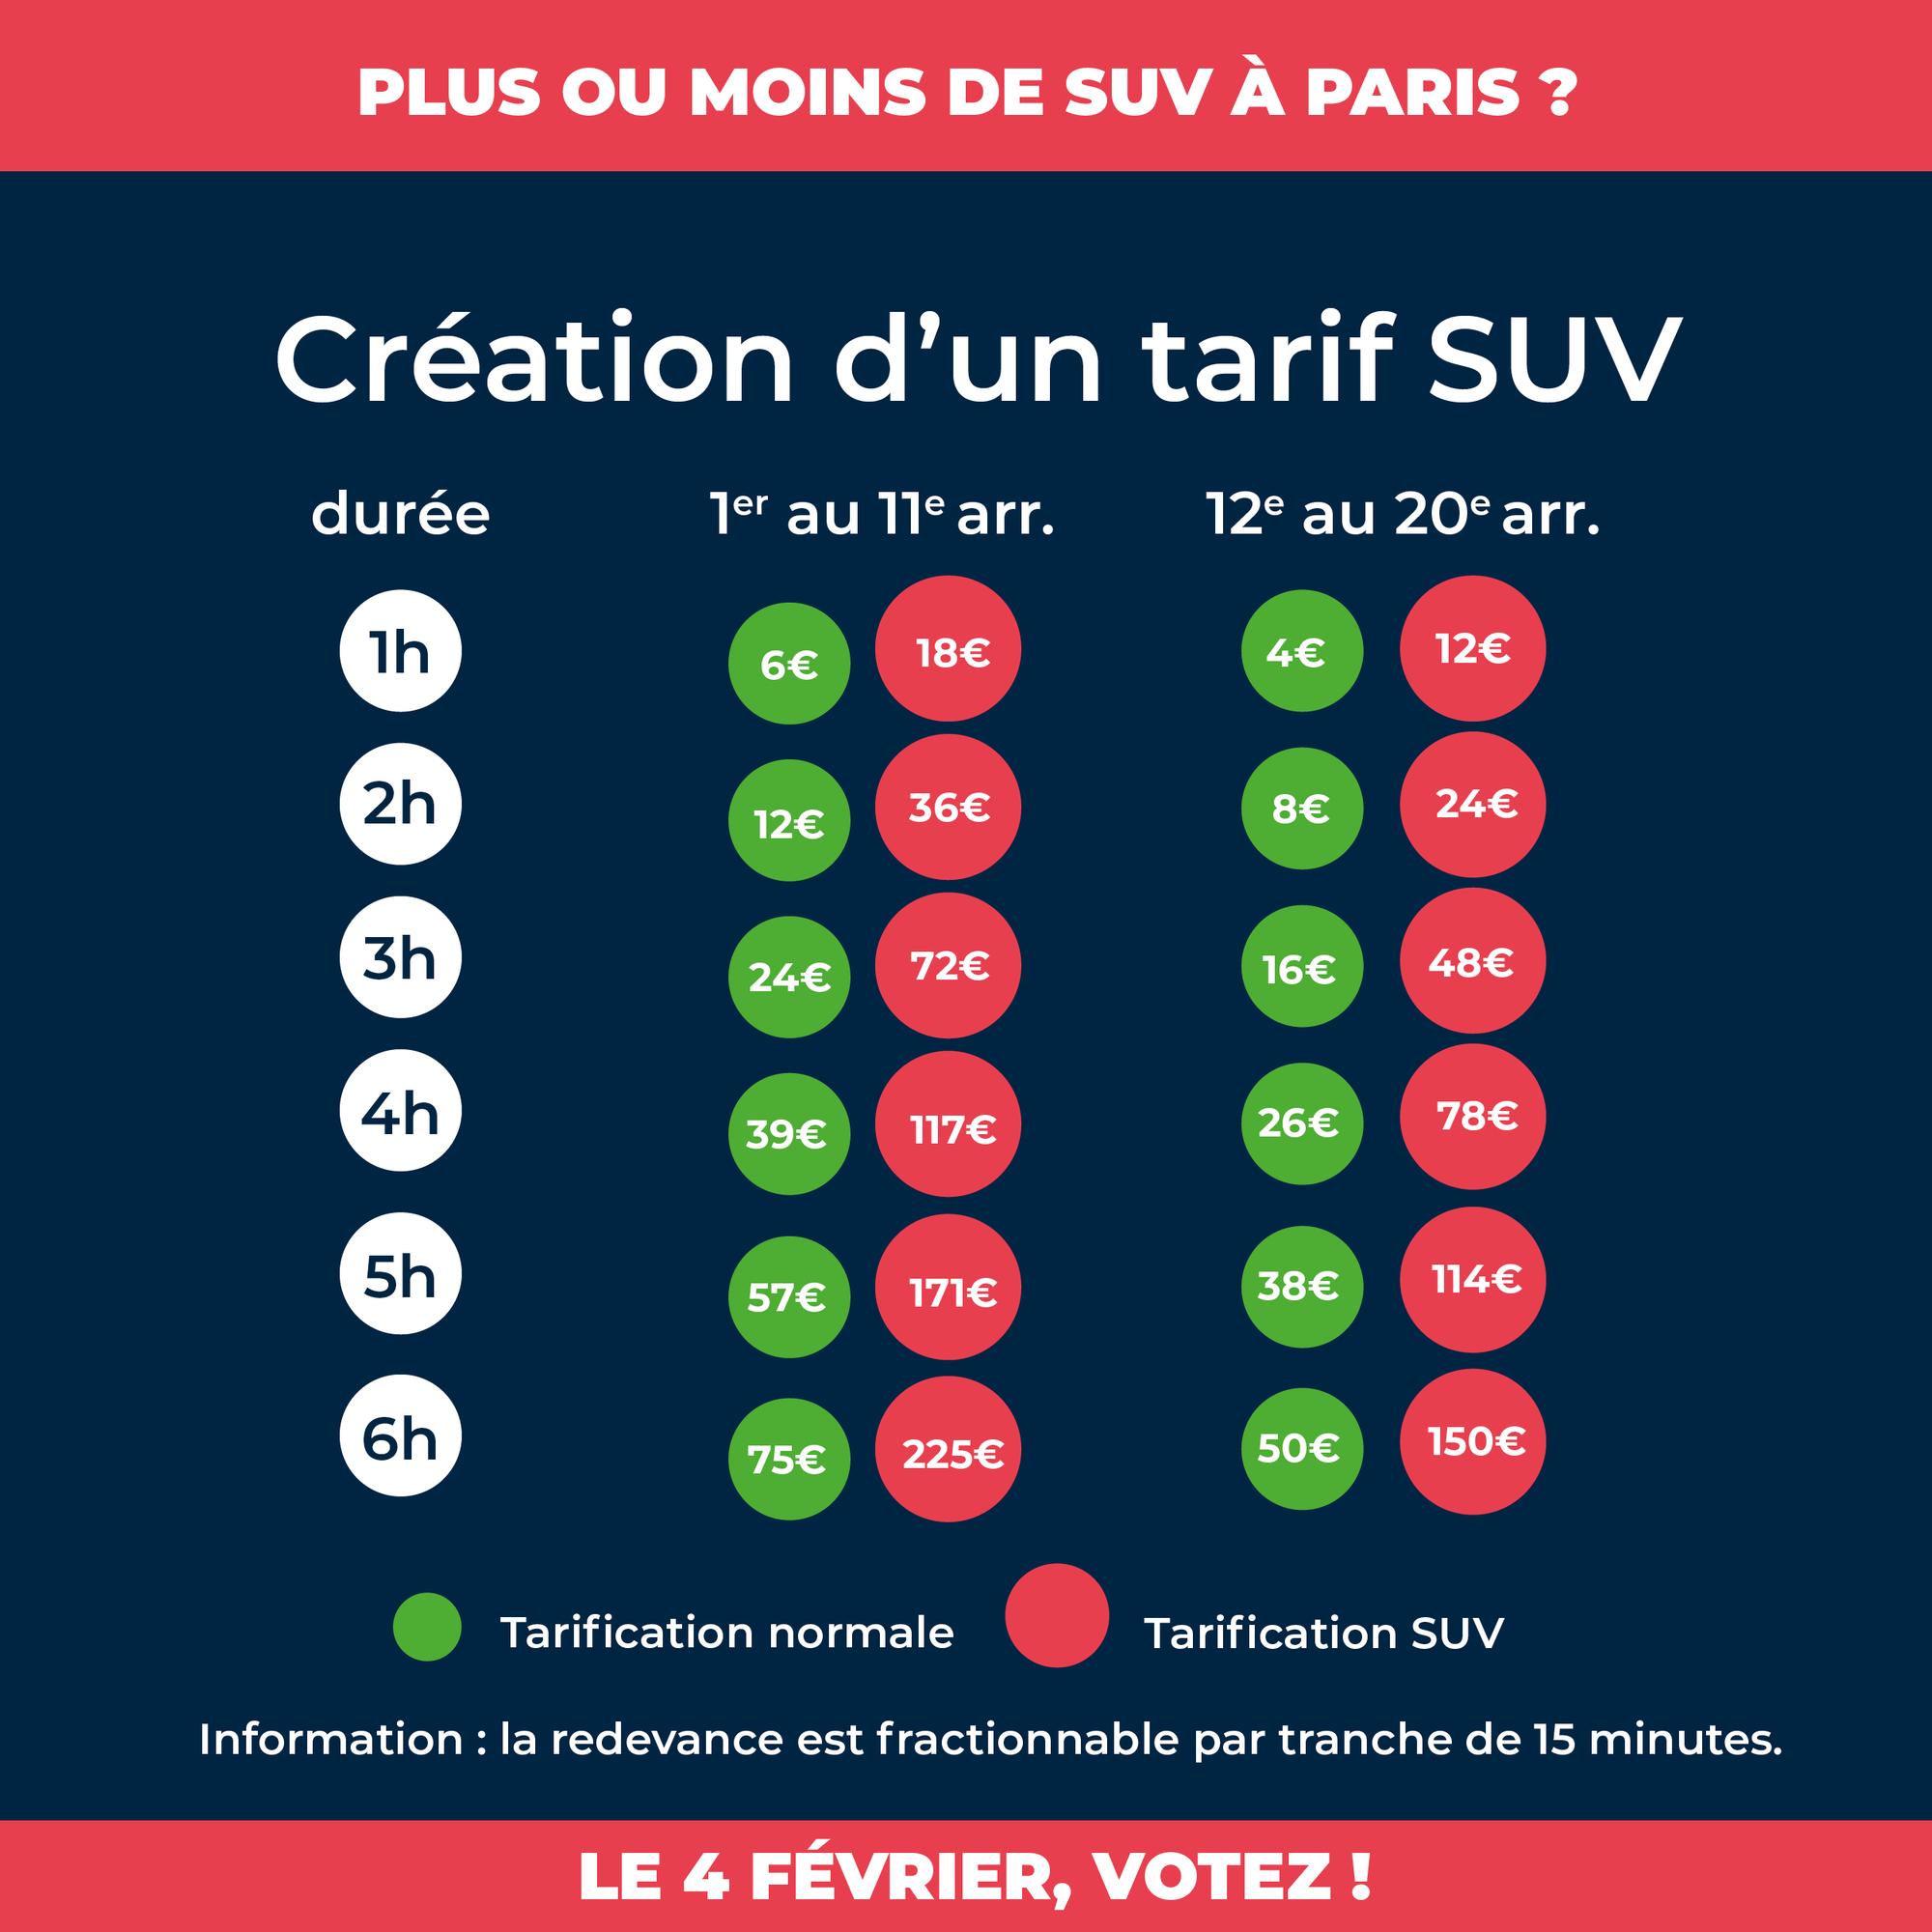 Parisians vote to treble parking fees for SUVs